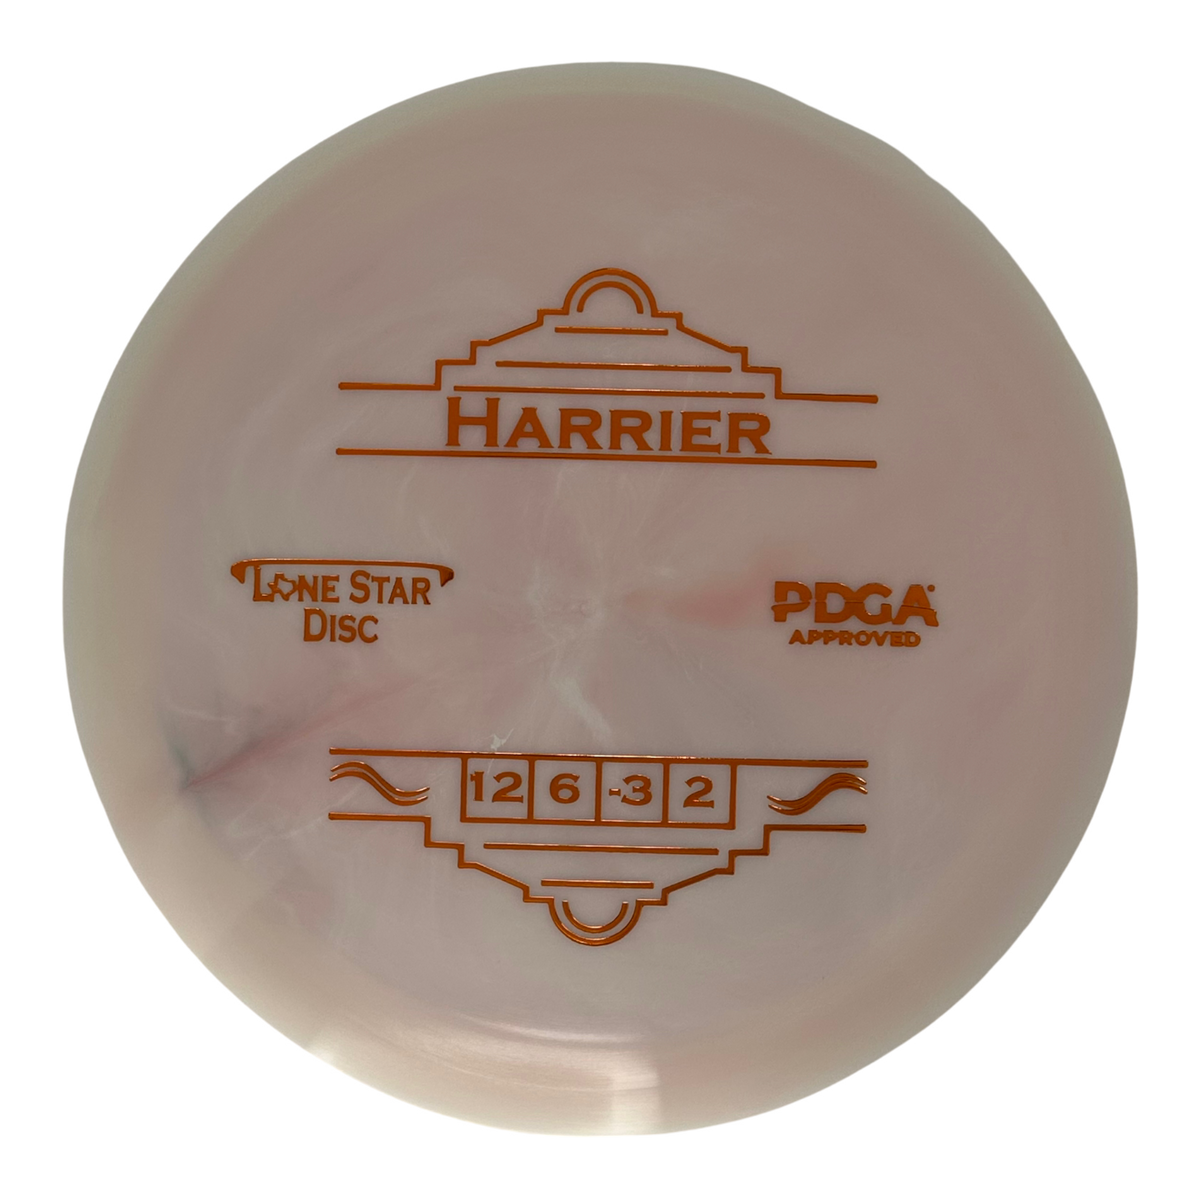 Lone Star Disc Bravo Harrier